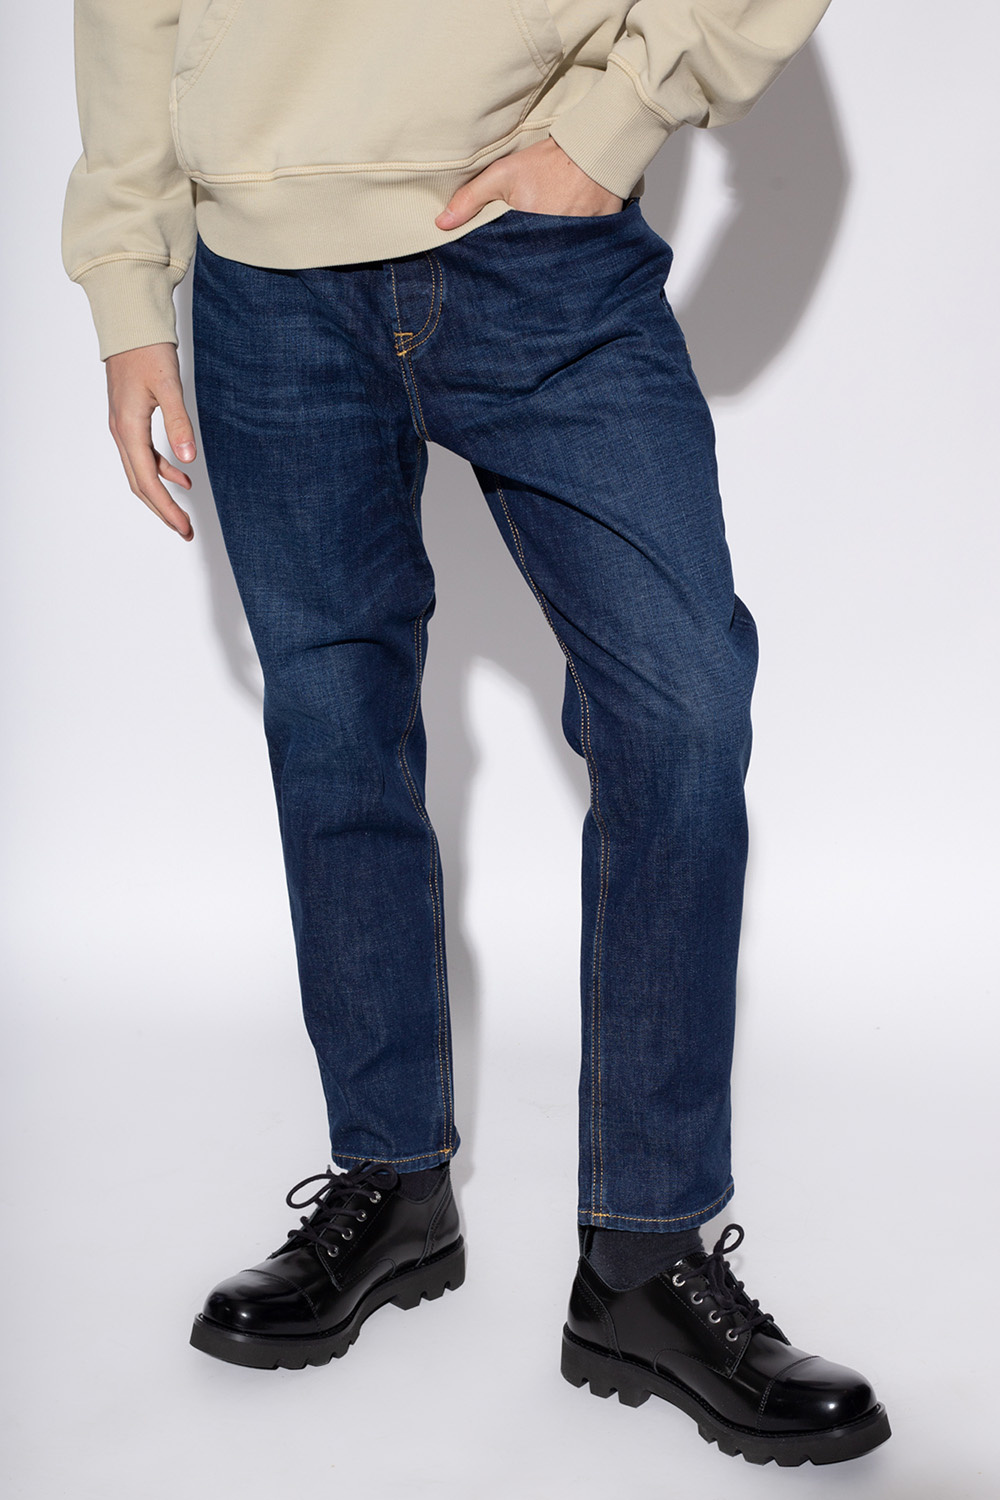 Diesel \'D | Men\'s bustier - jeans - Fining\' Clothing puffball dress JmksportShops peplum 